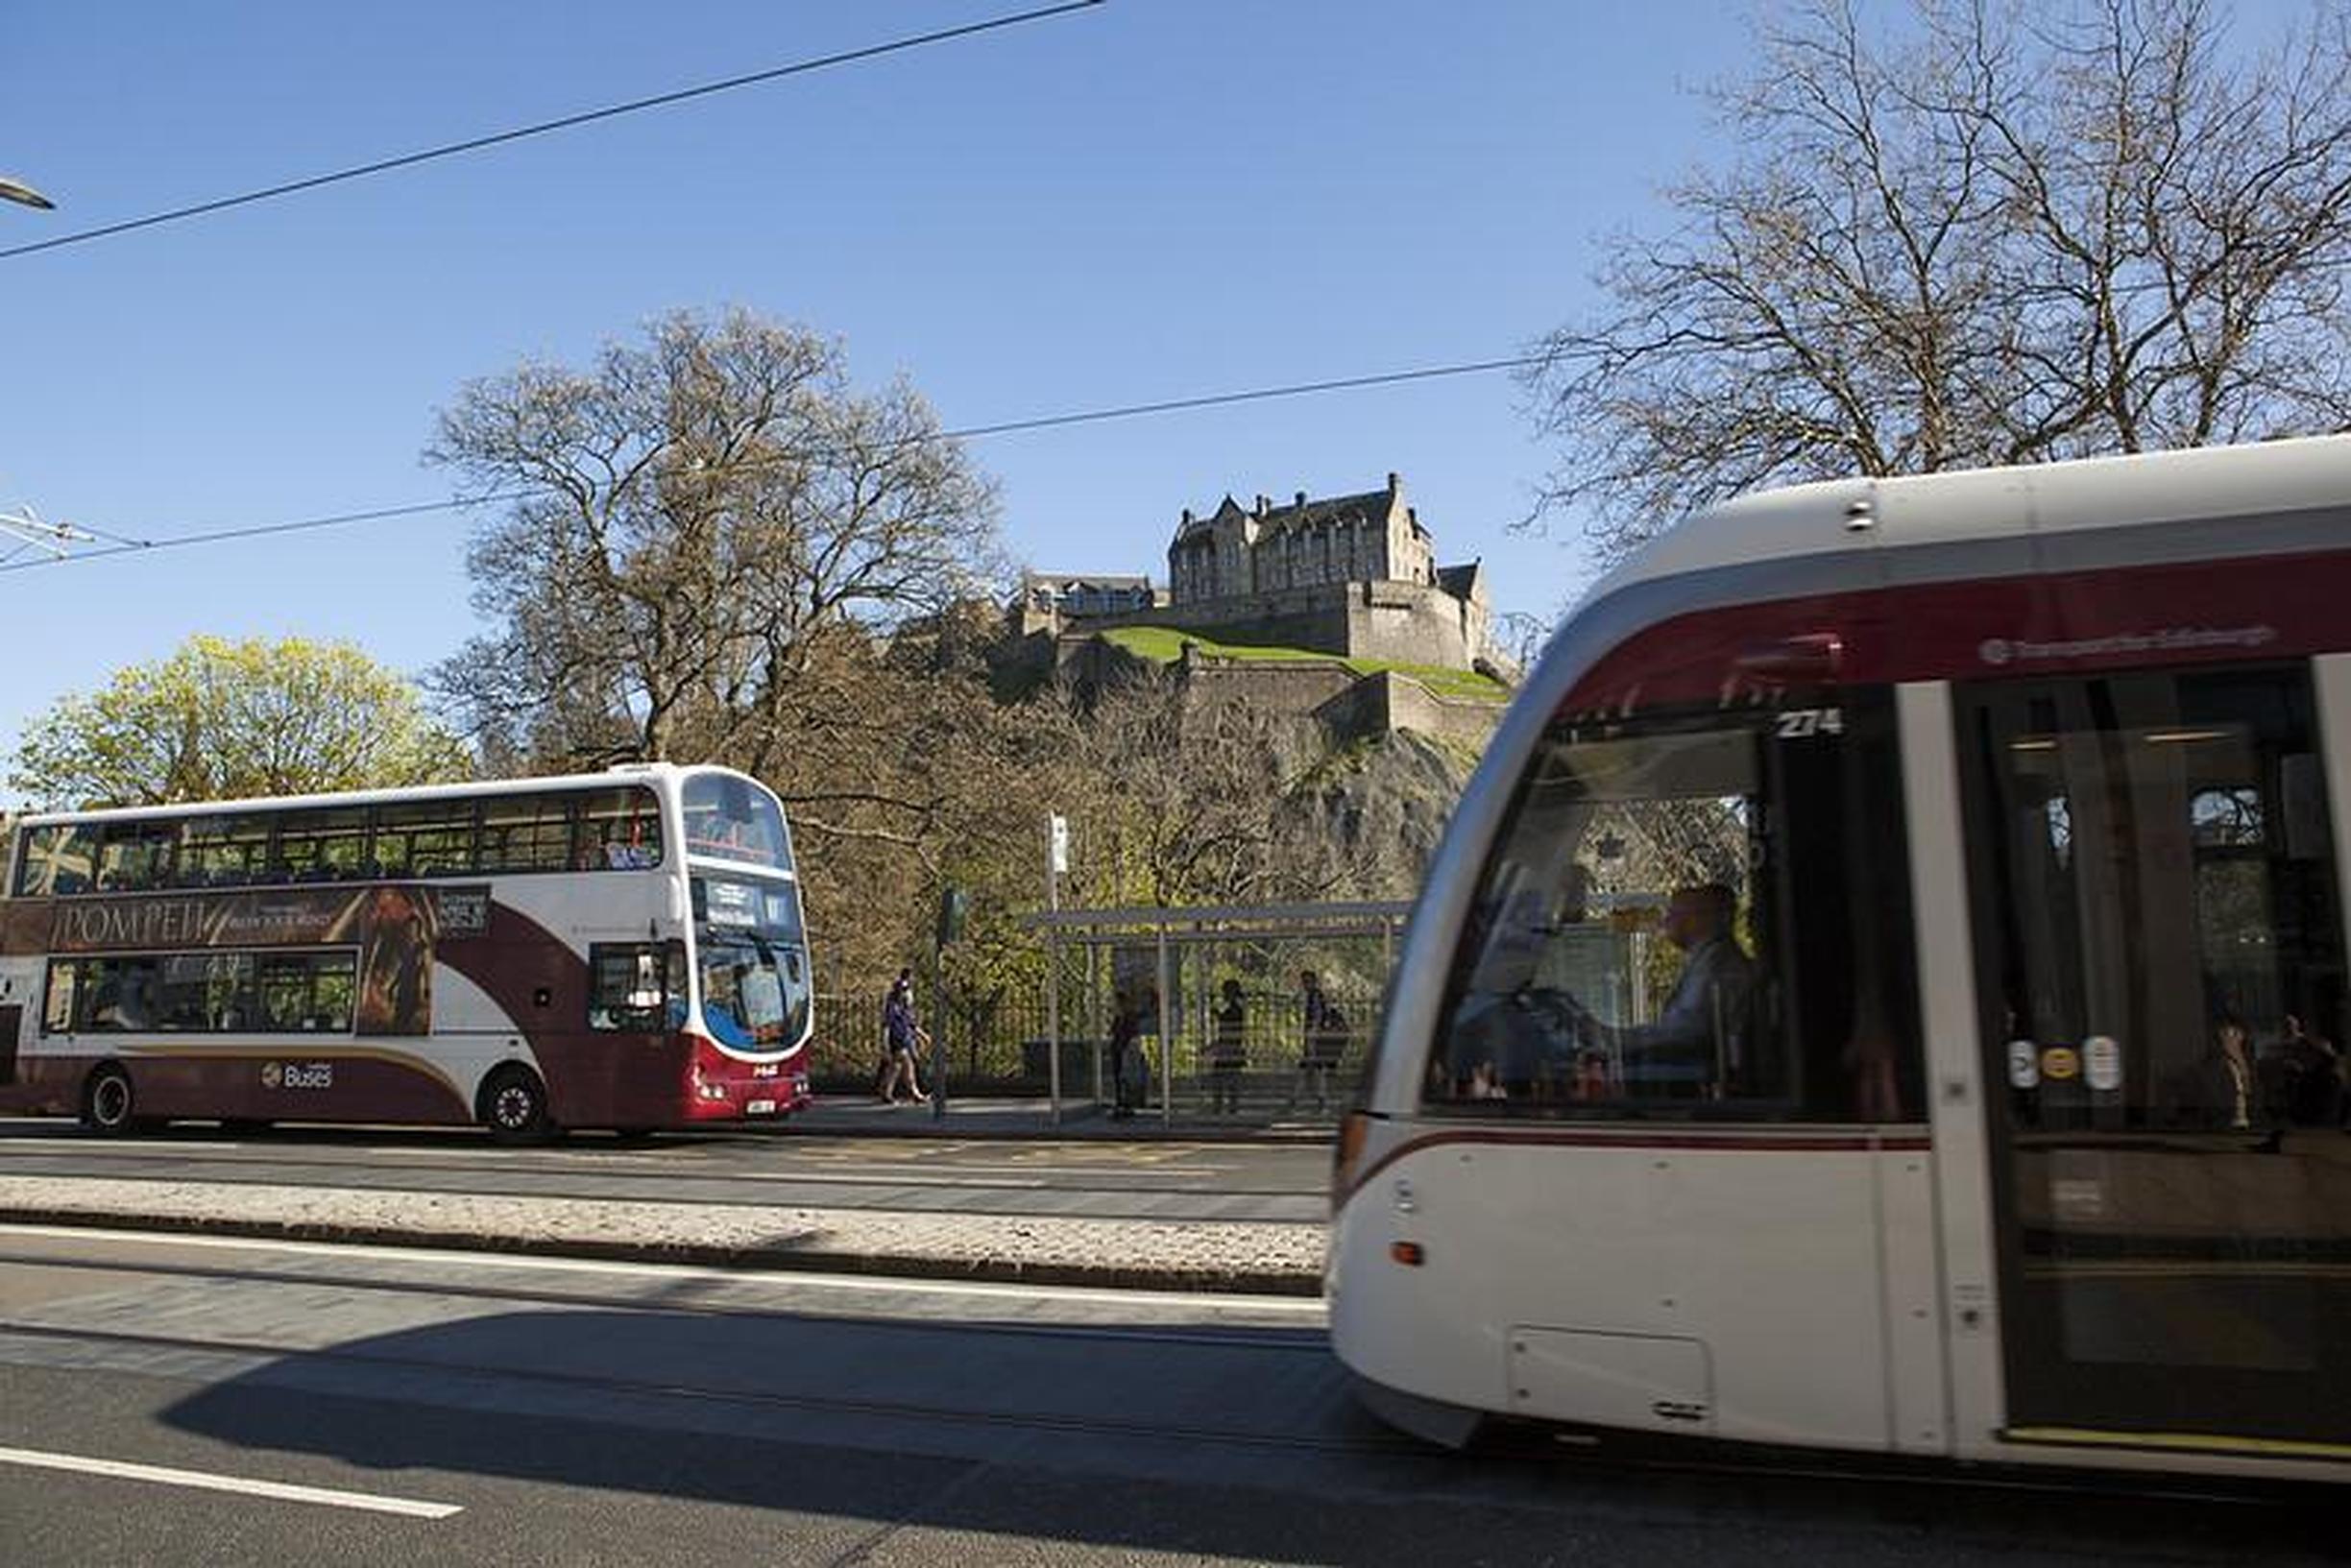 A Lothian Bus and Edinburgh tram